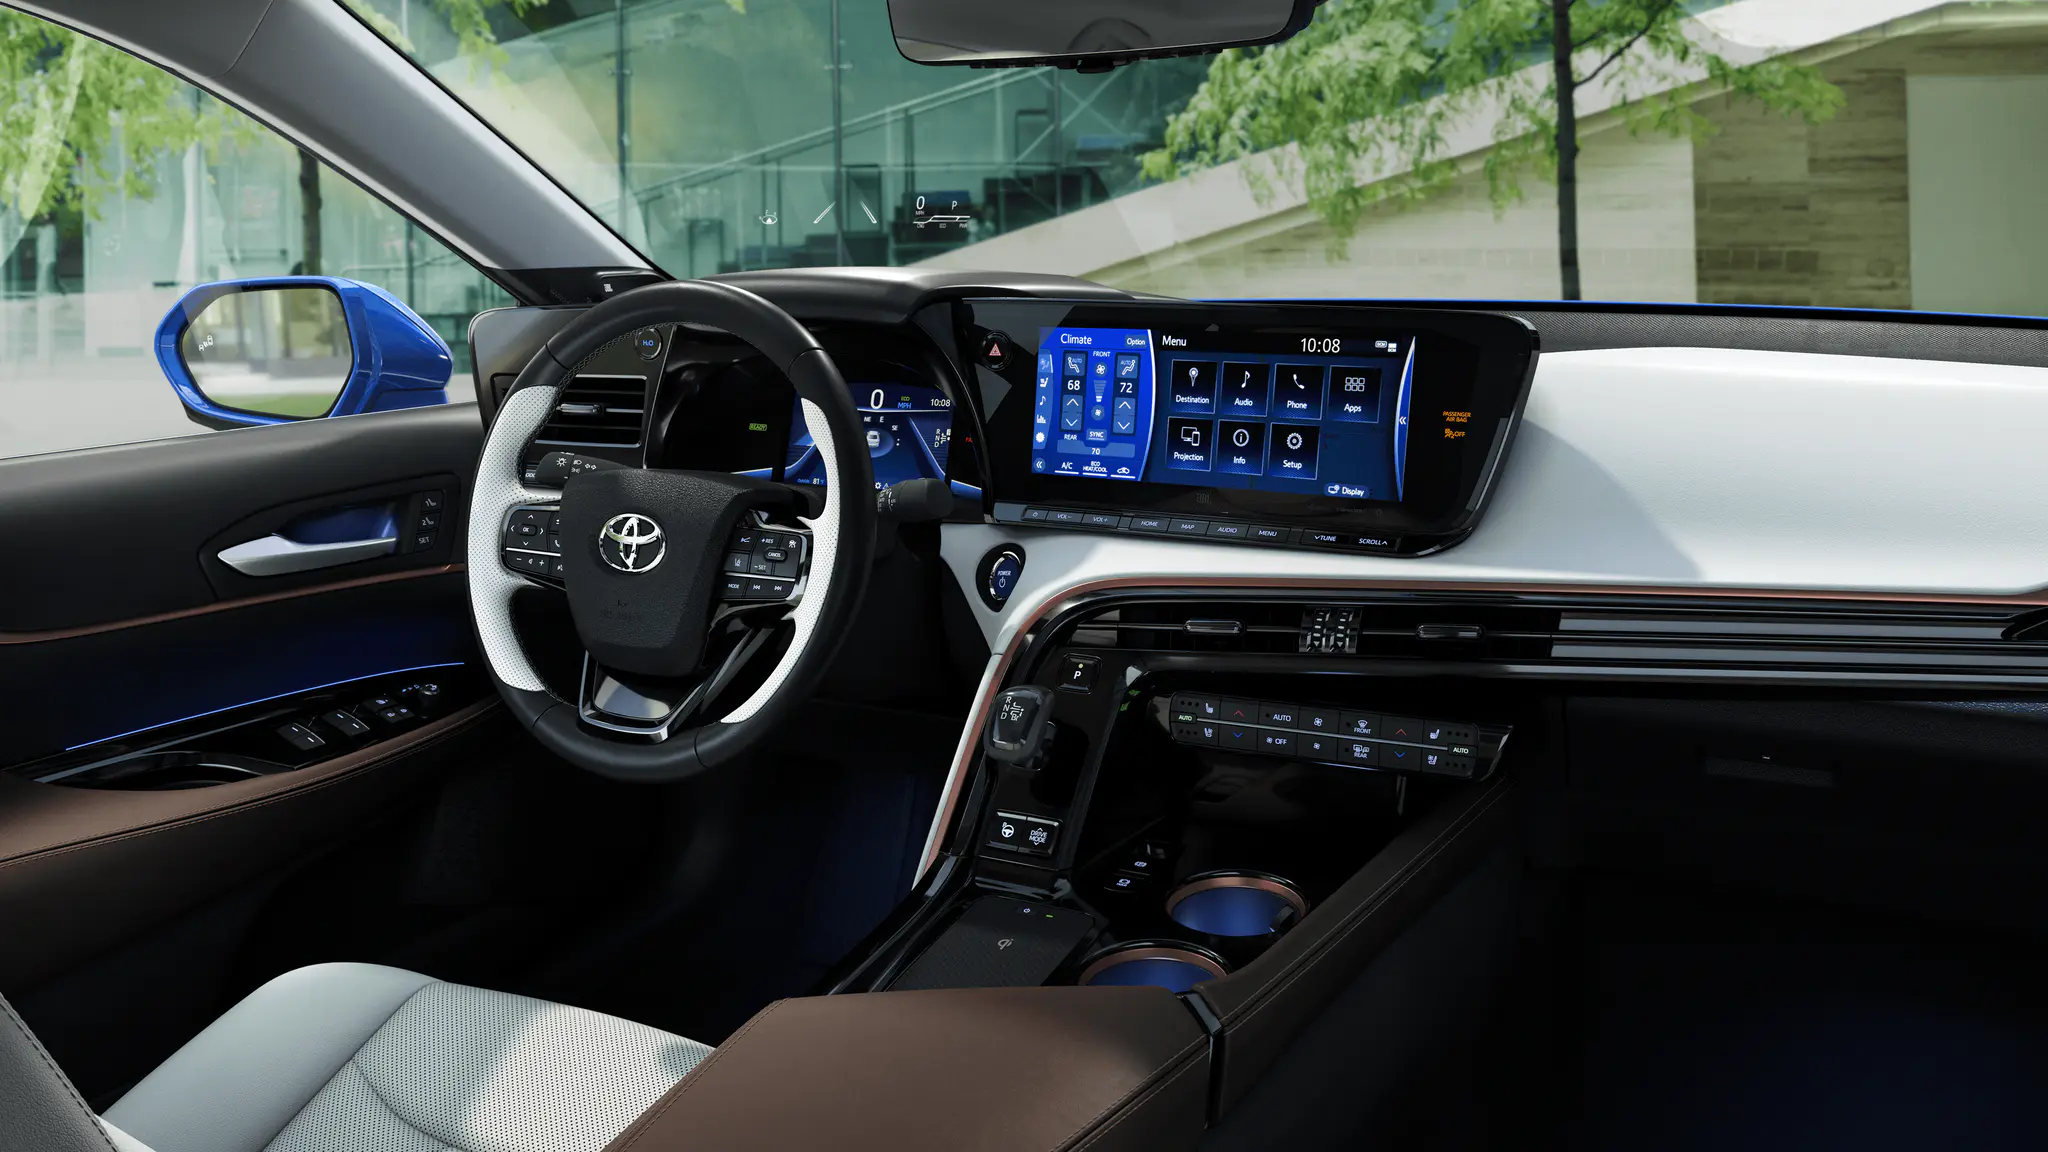 El interior del coche es totalmente futurista